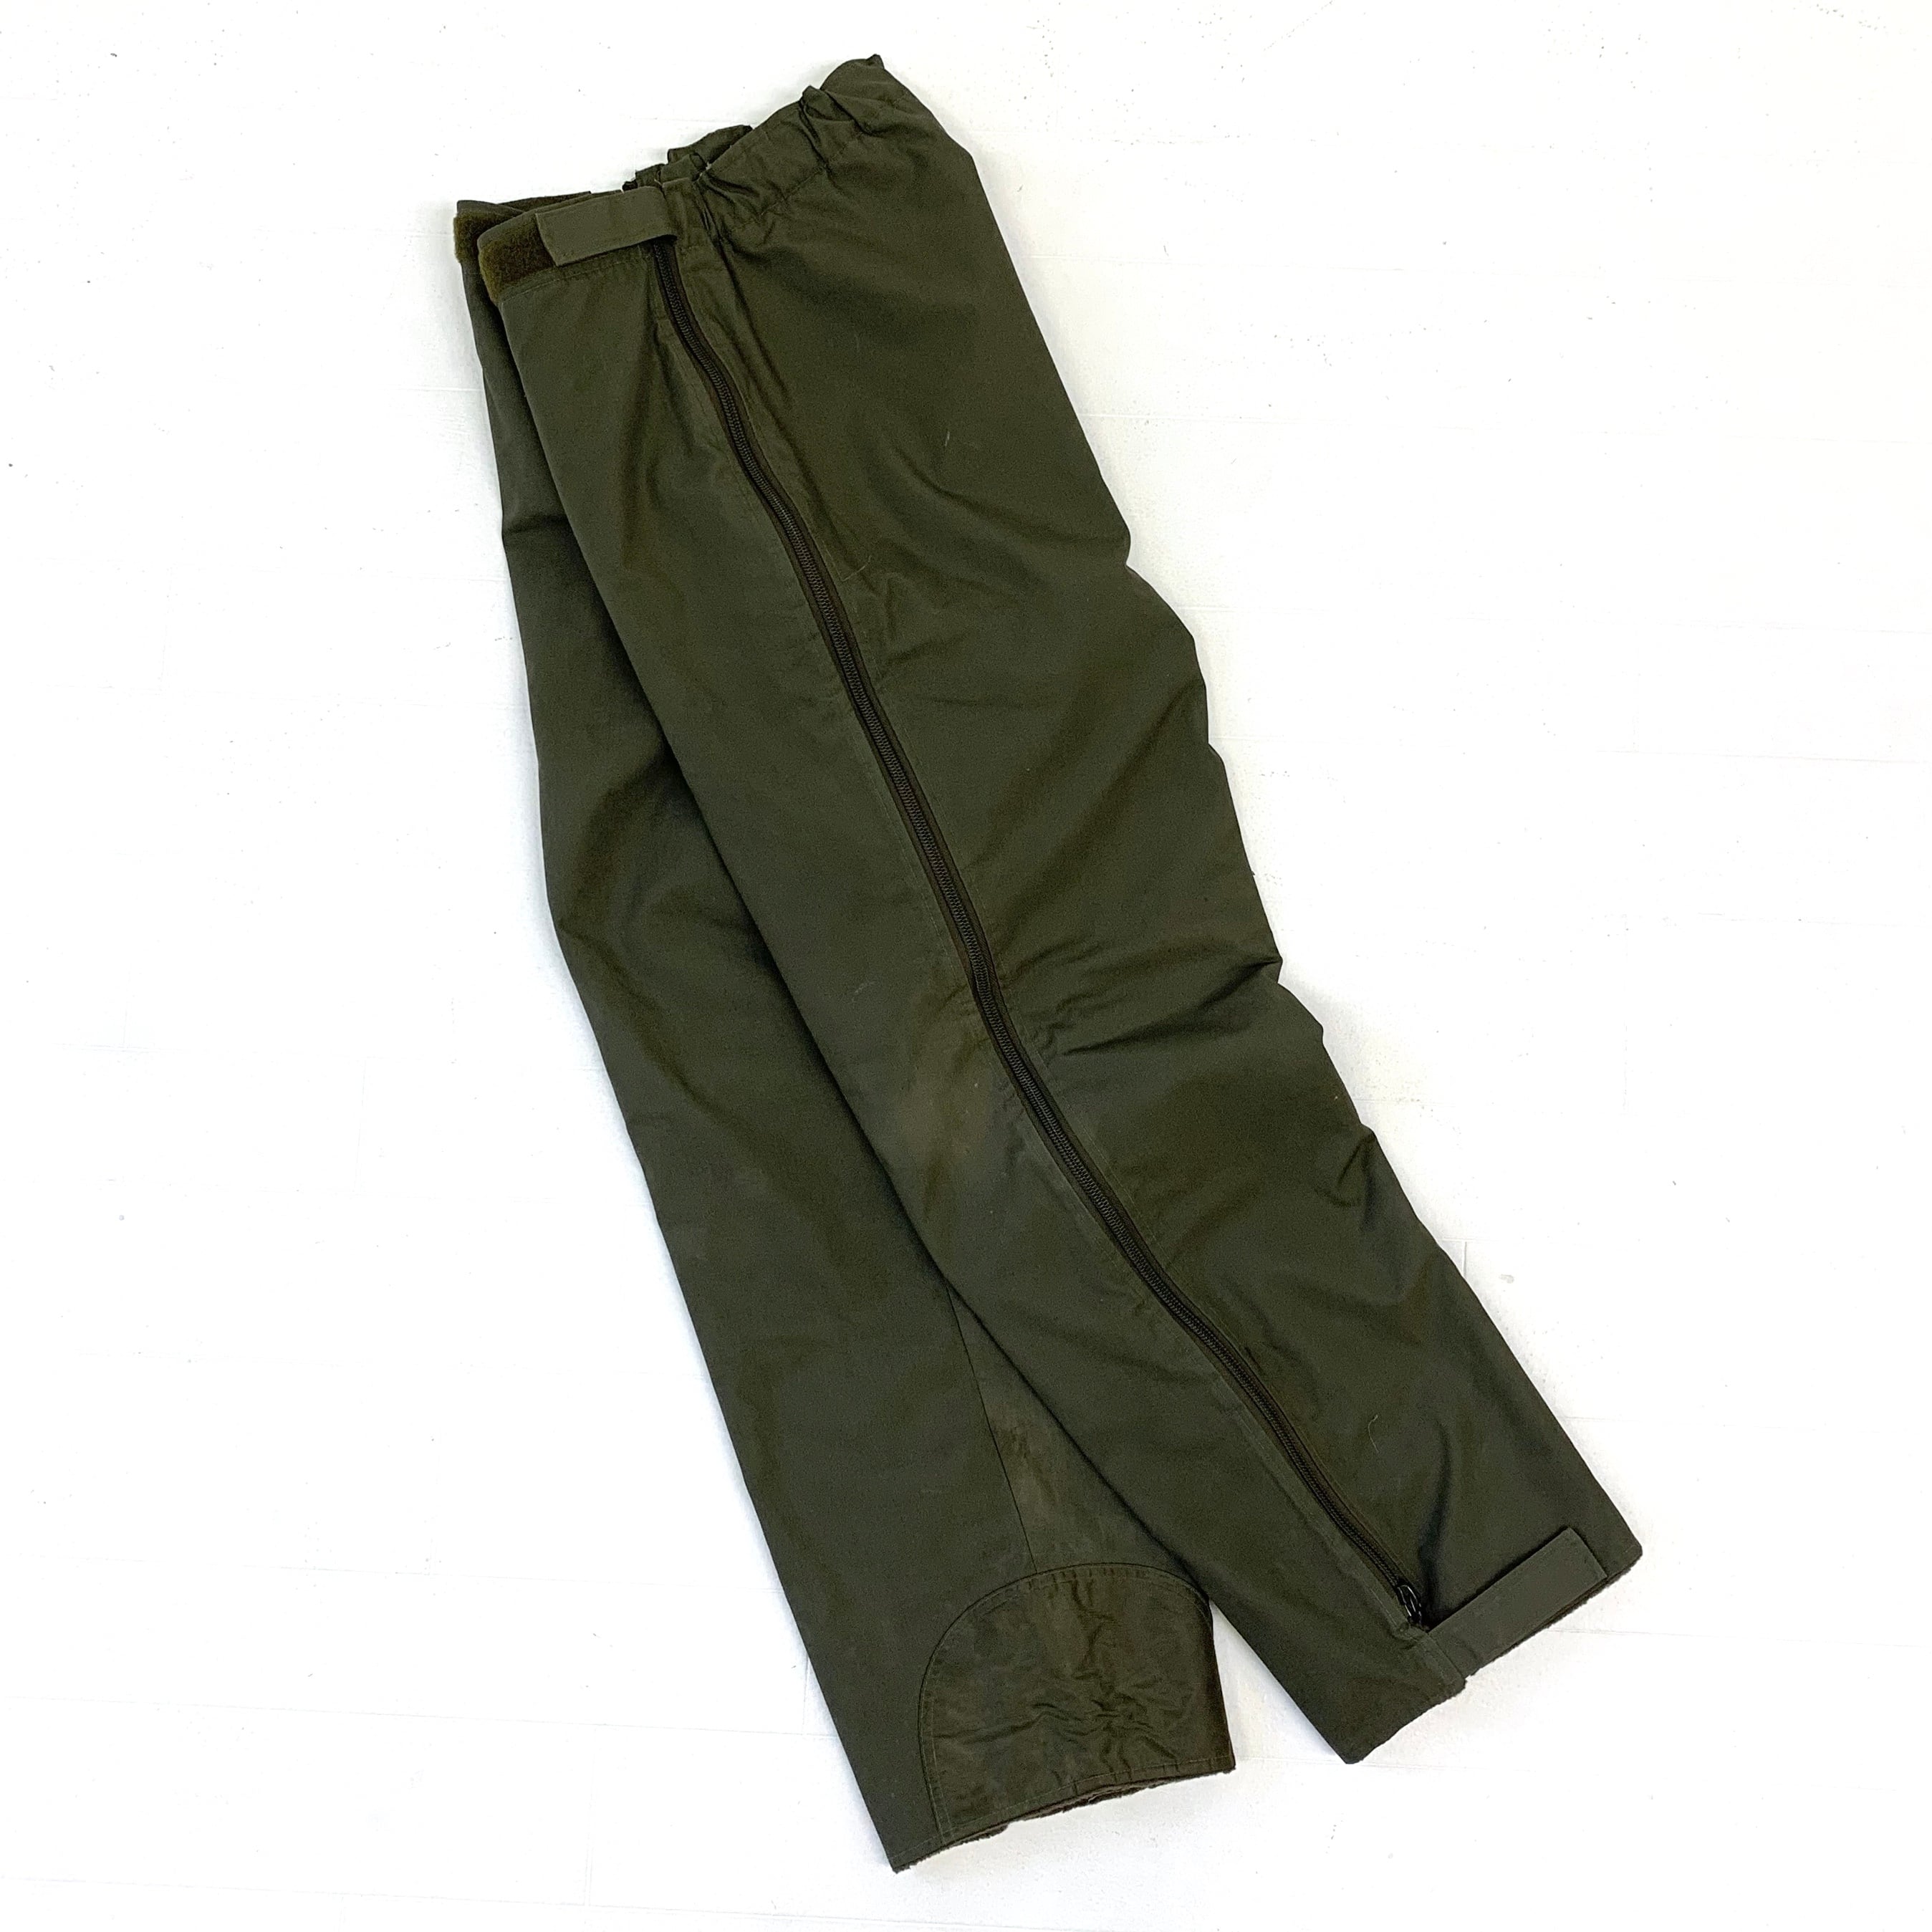 1980's German military pile lined over pants オリーブ オーバーパンツ サイドジップ パイルライニング  裏ボア ドイツ軍 80s 80年代 vintage ユーロミリタリー 古着 1475